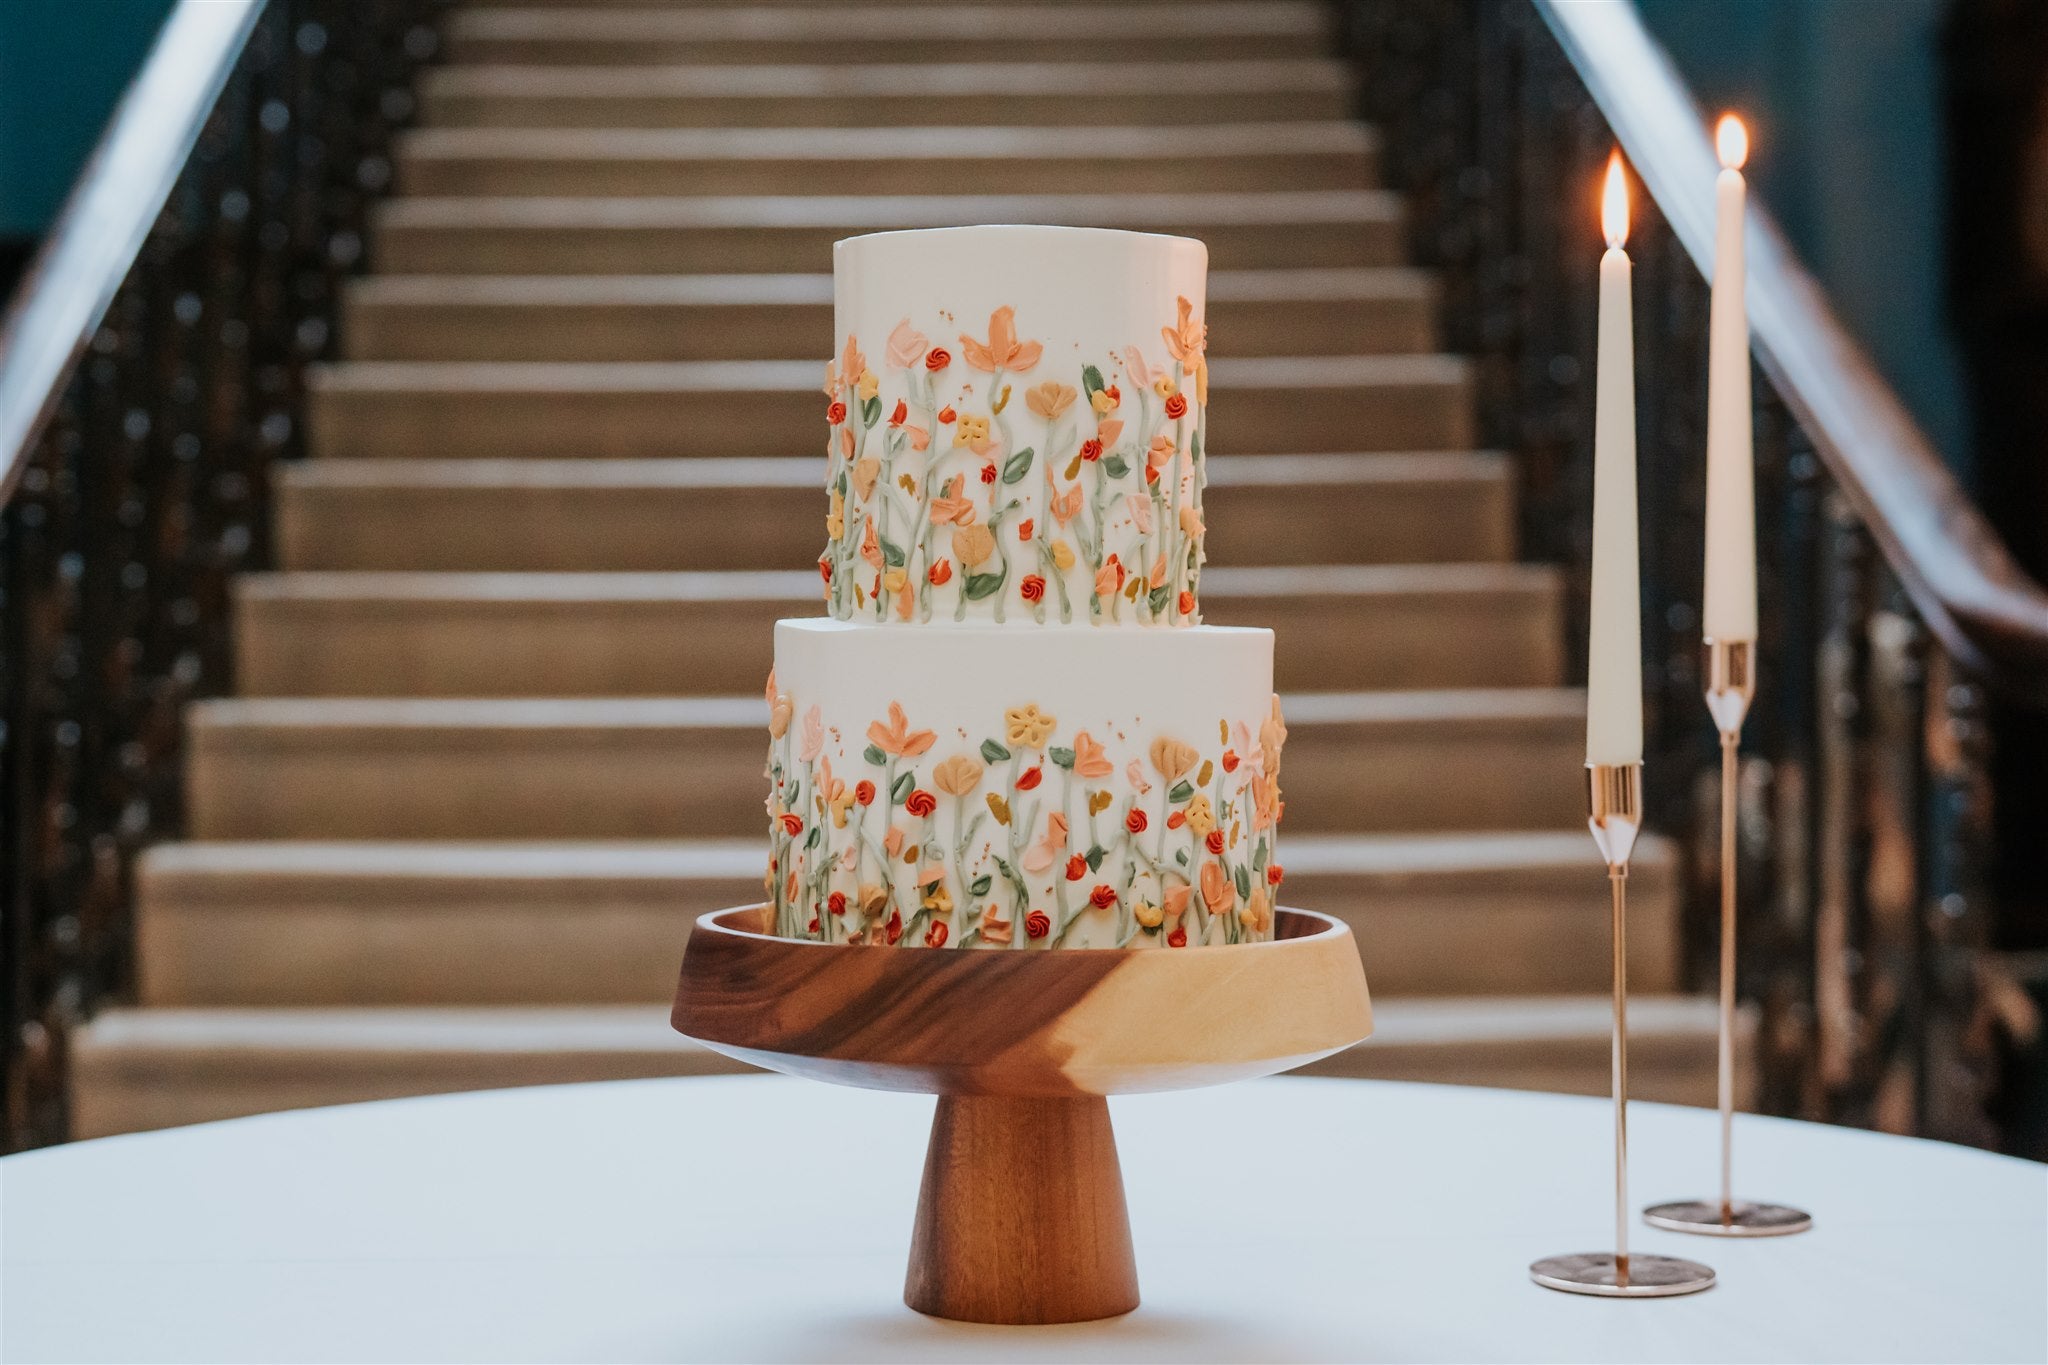 Painted flowers wedding cake created by Pastel by Rachel. Wedding cakes Ireland. Wedding cakes Northern Ireland